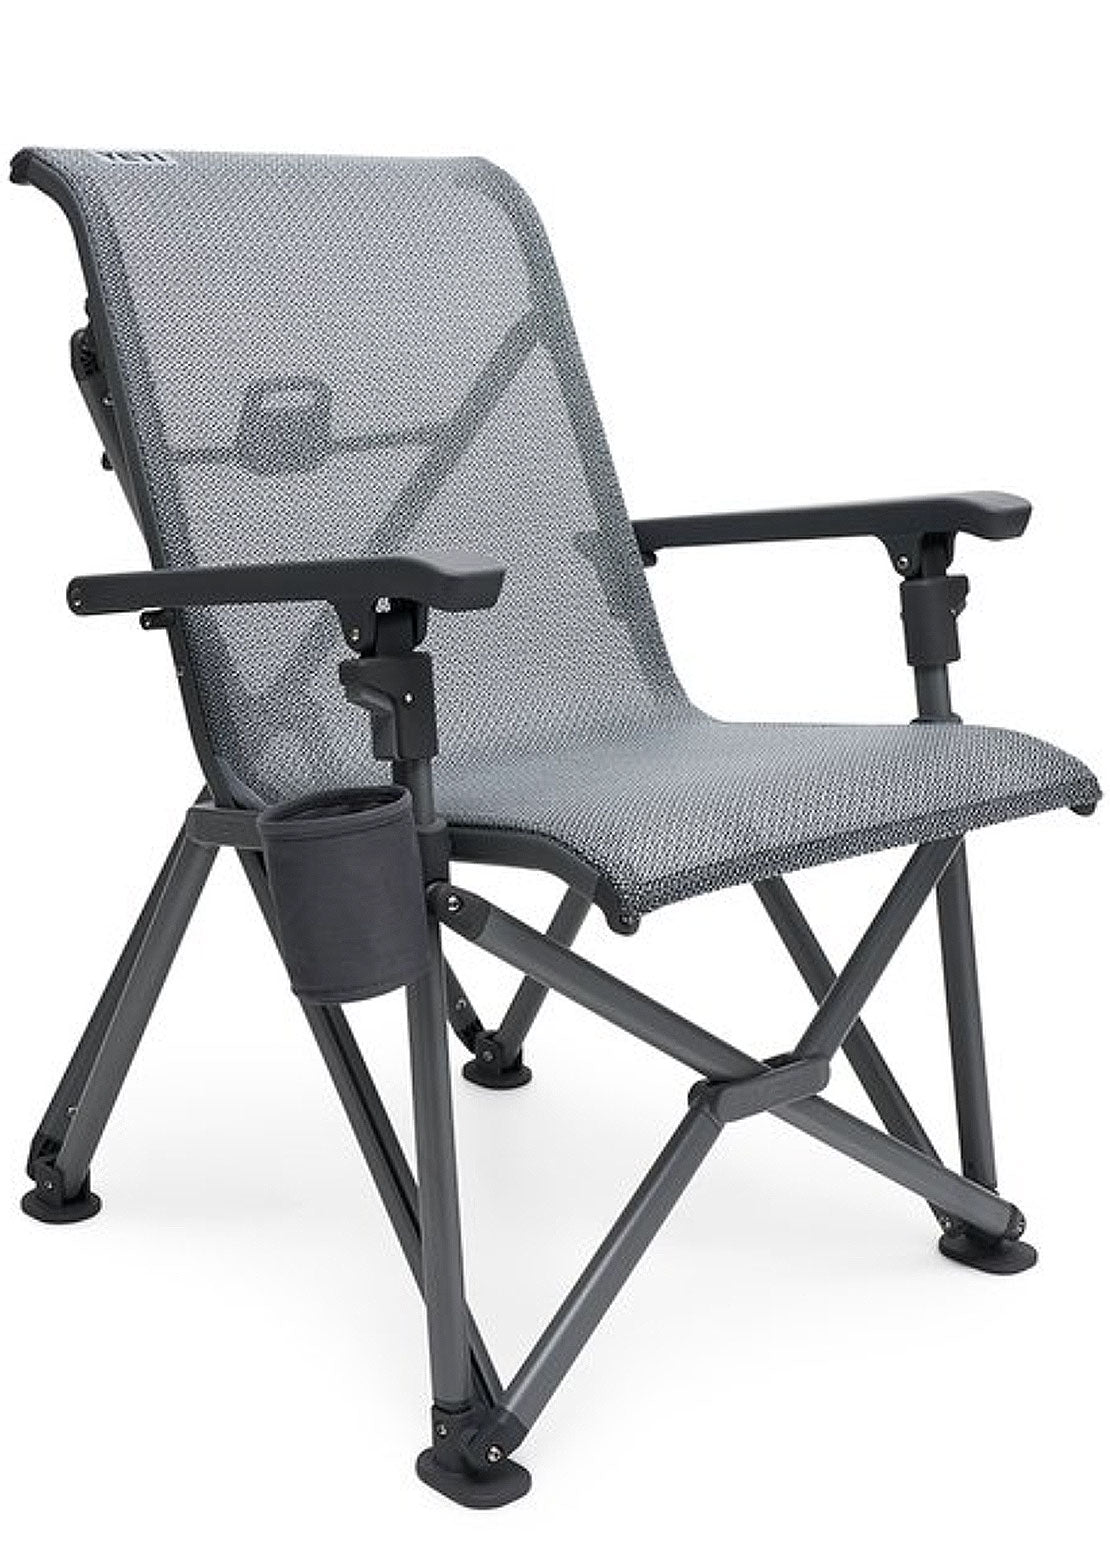 YETI Trailhead Camp Chair Charcoal